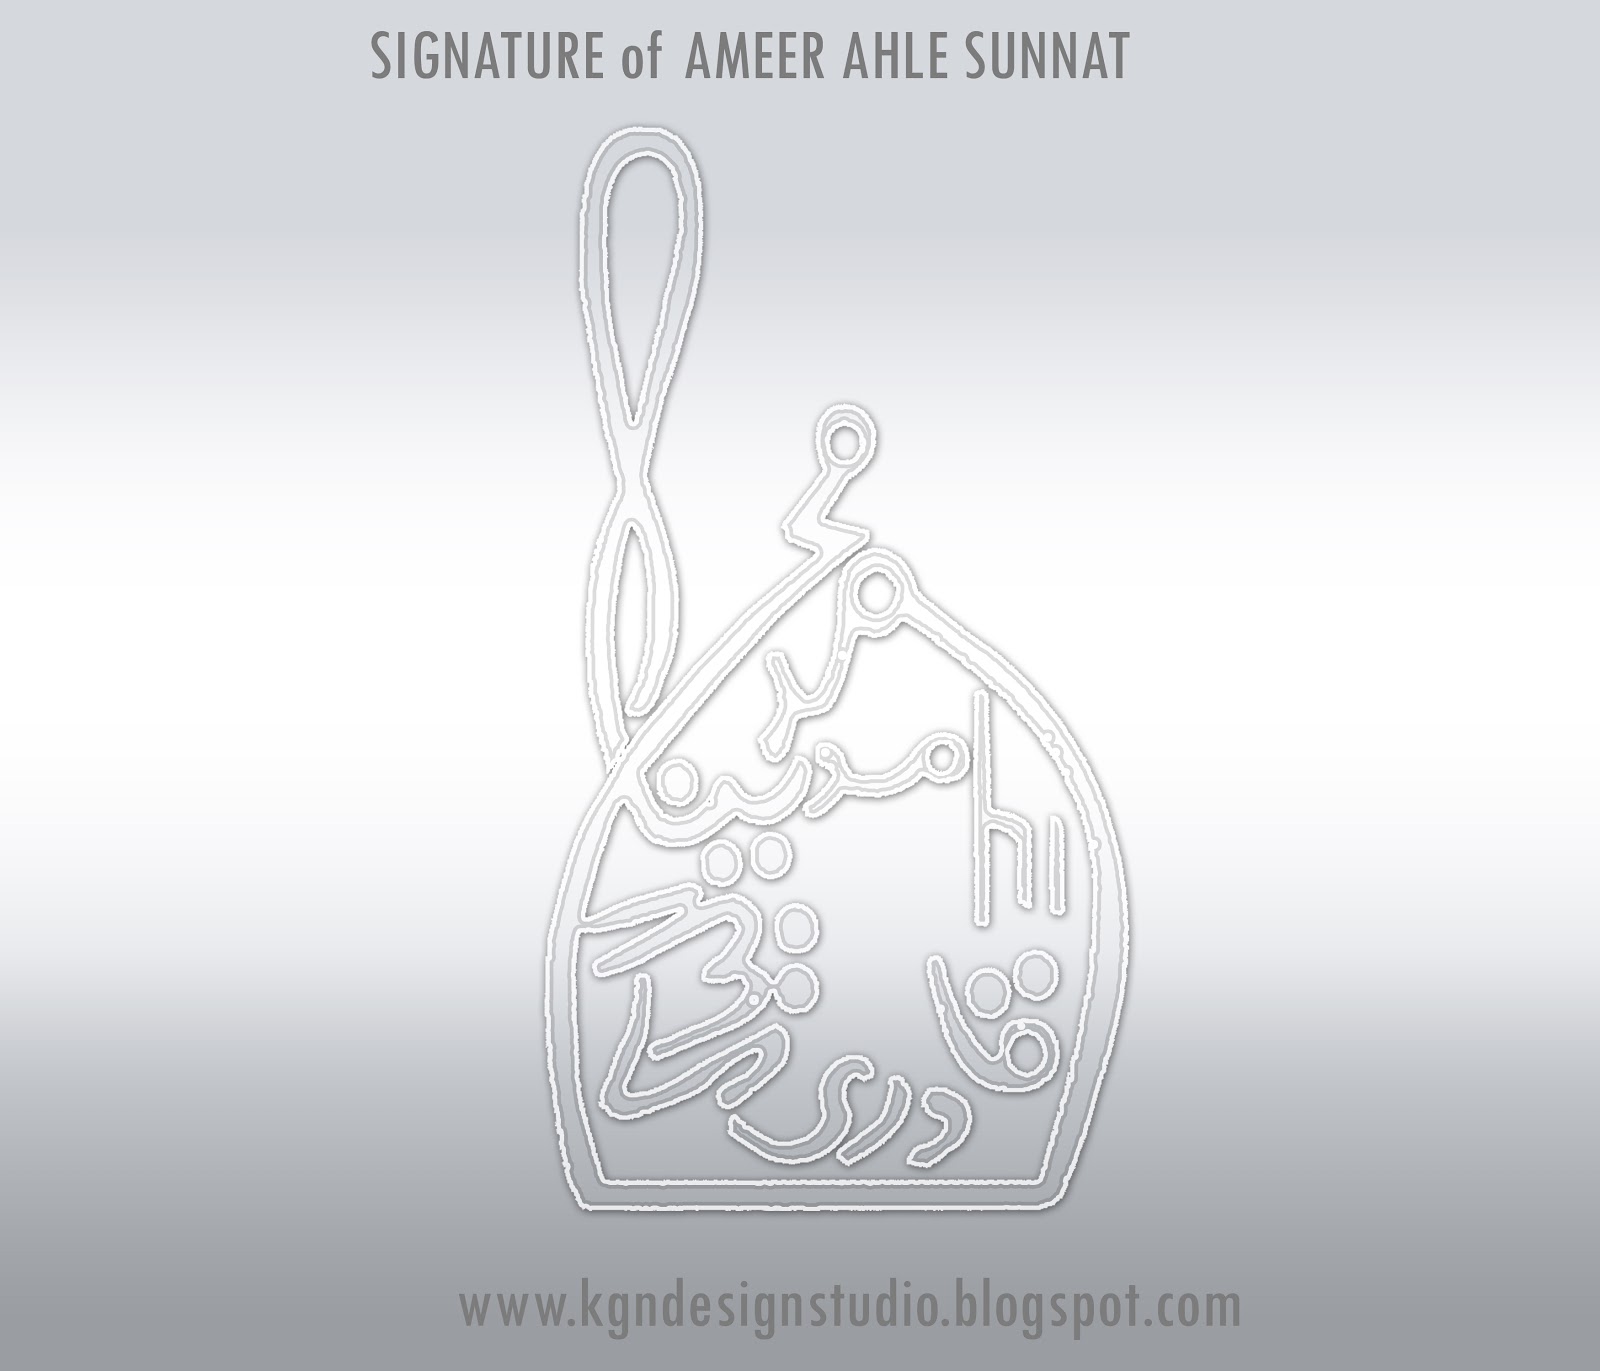 http://3.bp.blogspot.com/-xsUTX0NL6QA/UQZpYxPLFXI/AAAAAAAADBk/JF7H4EtSRbM/s1600/Signature+of+Amir+Ahle+Sunnat.jpg